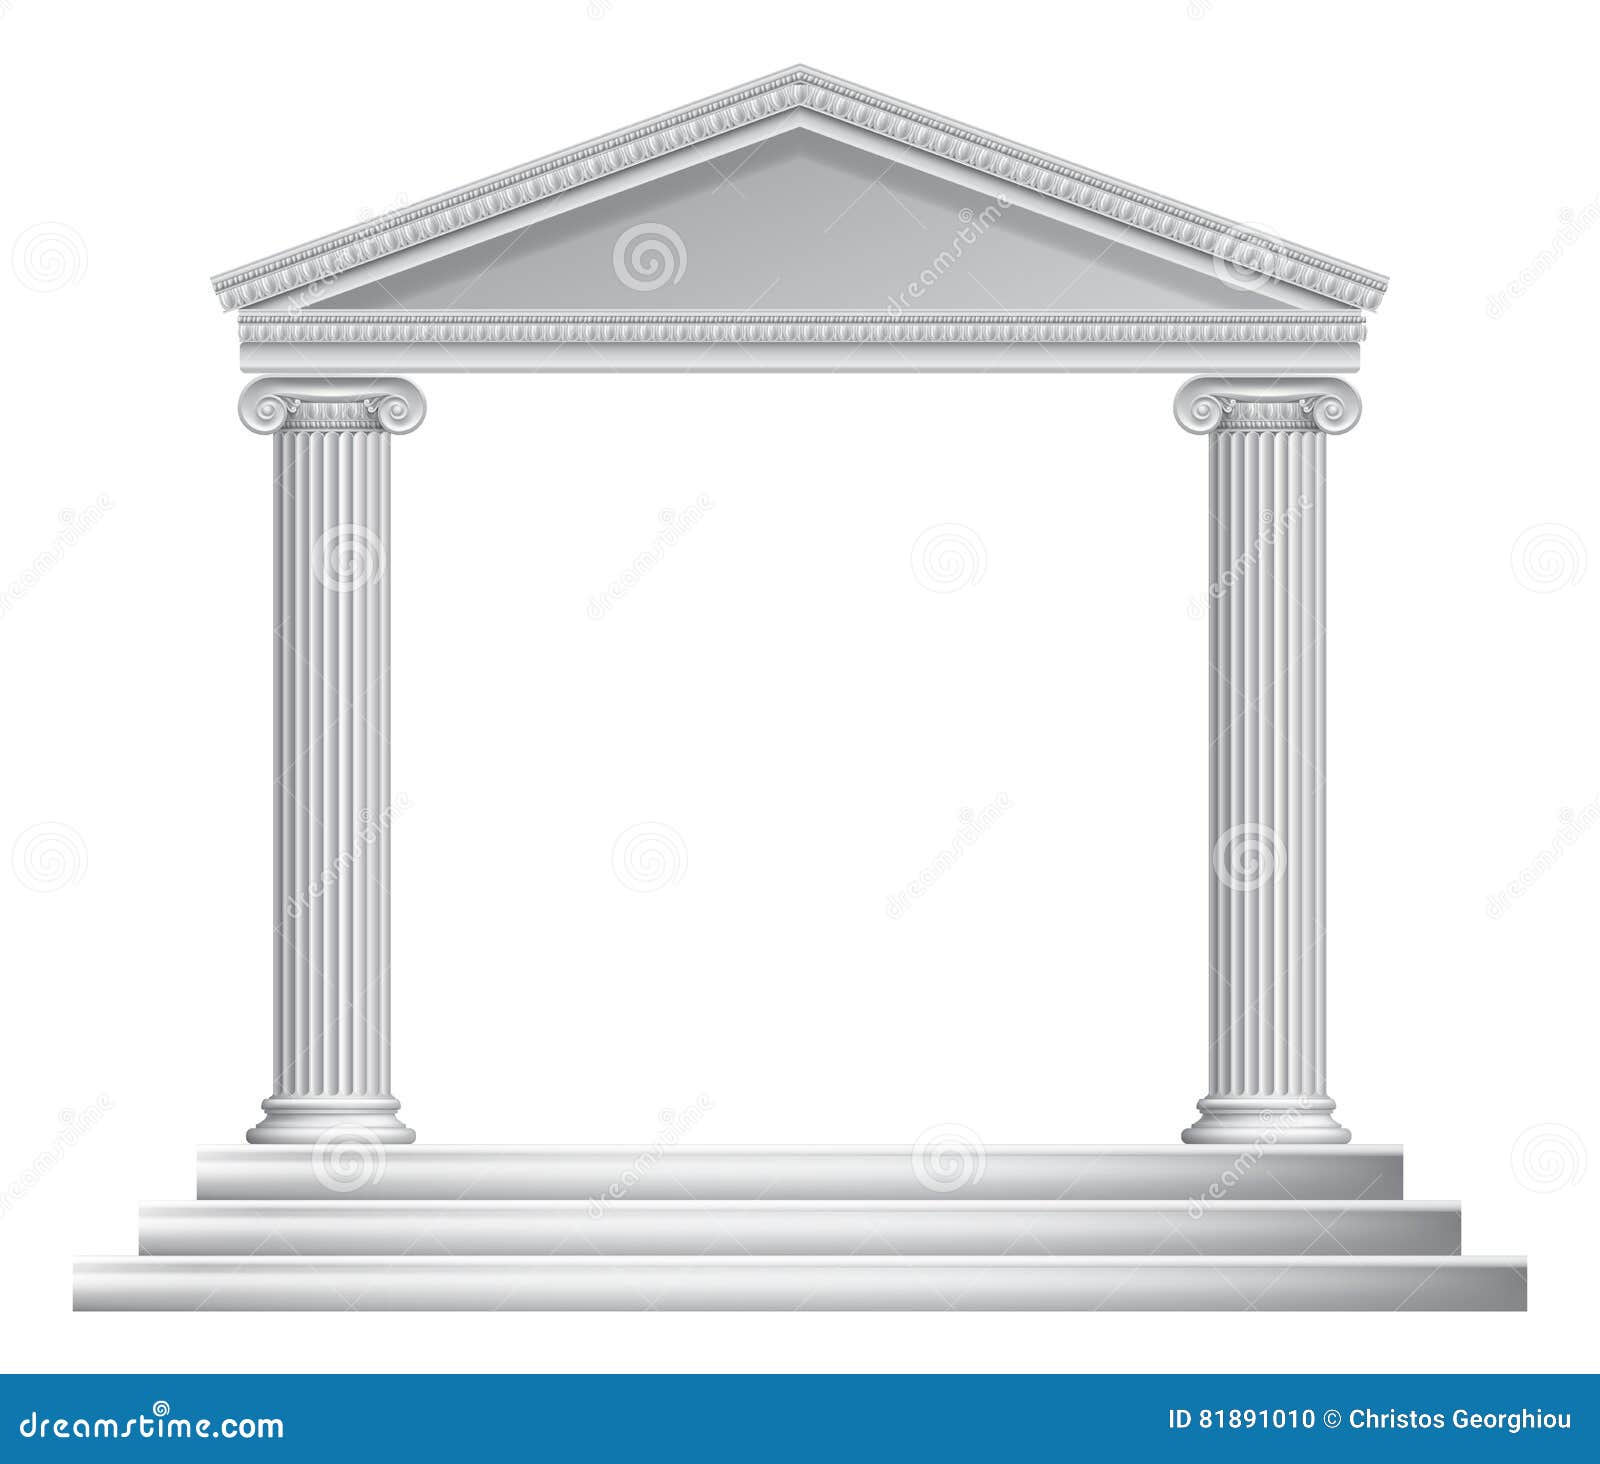 greek column temple